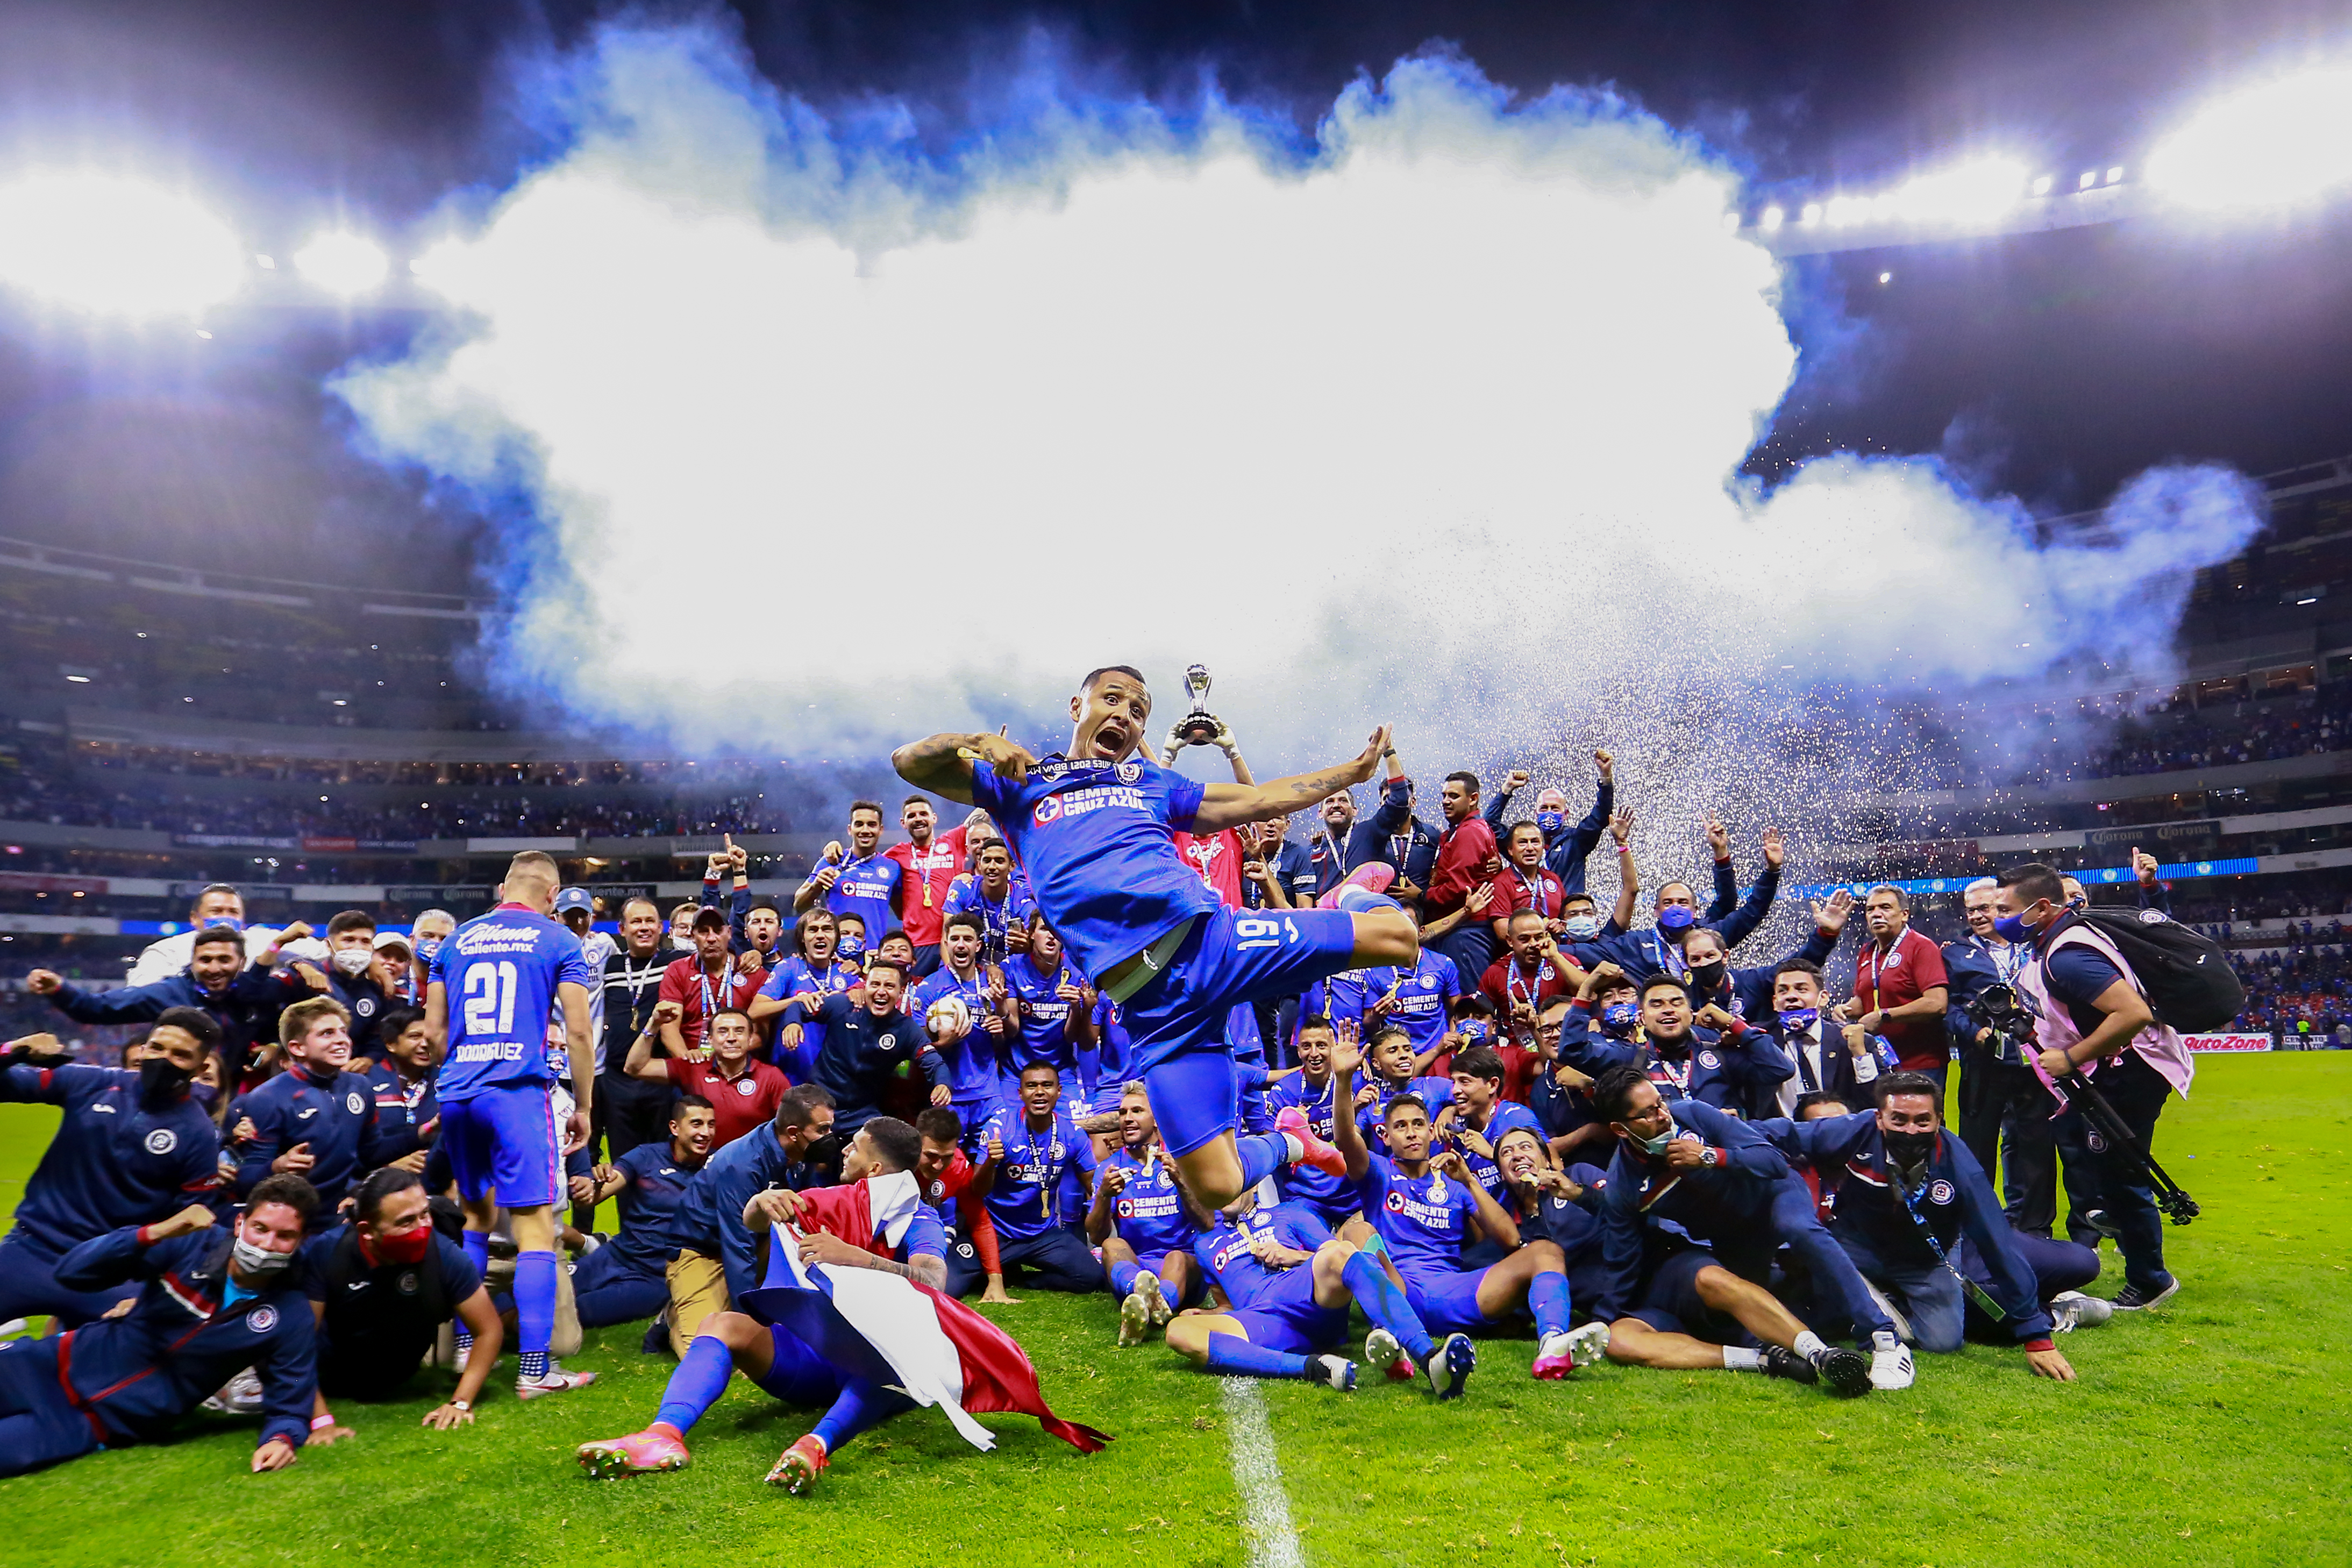 Tim sepakbola Cruz Azul memenangkan Liga MX (Mexican Football League Championship) setelah 25 tahun gagal di babak final. Foto: Eloisa Sanchez De Alba